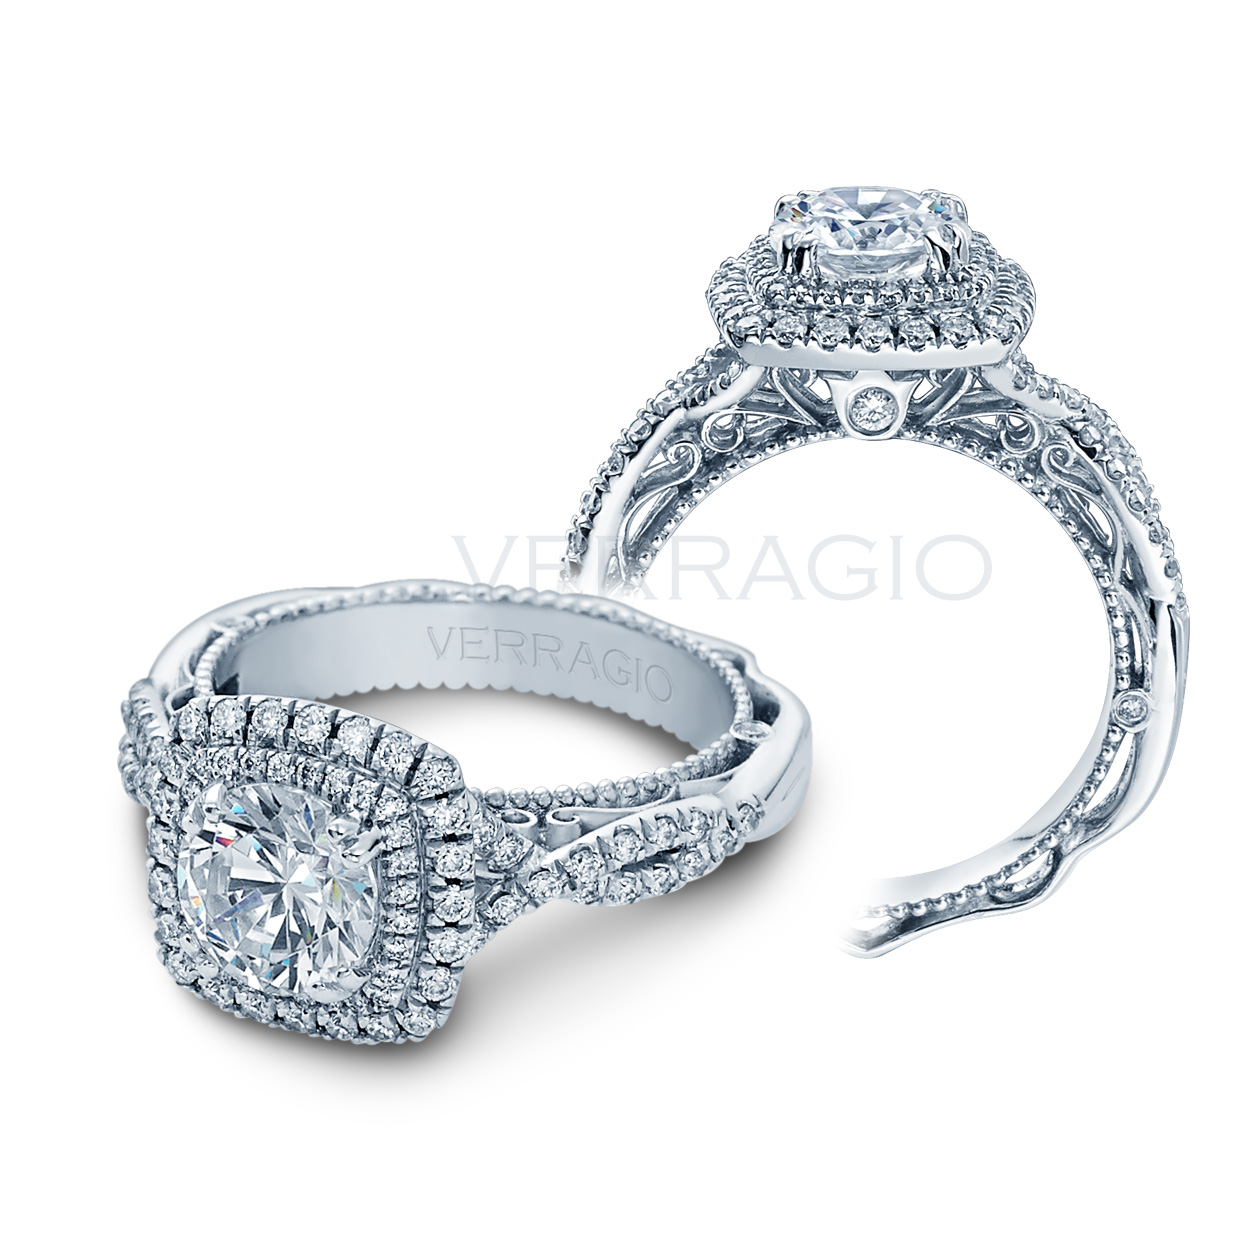 Verragio Diamond Engagement Ring Mounting